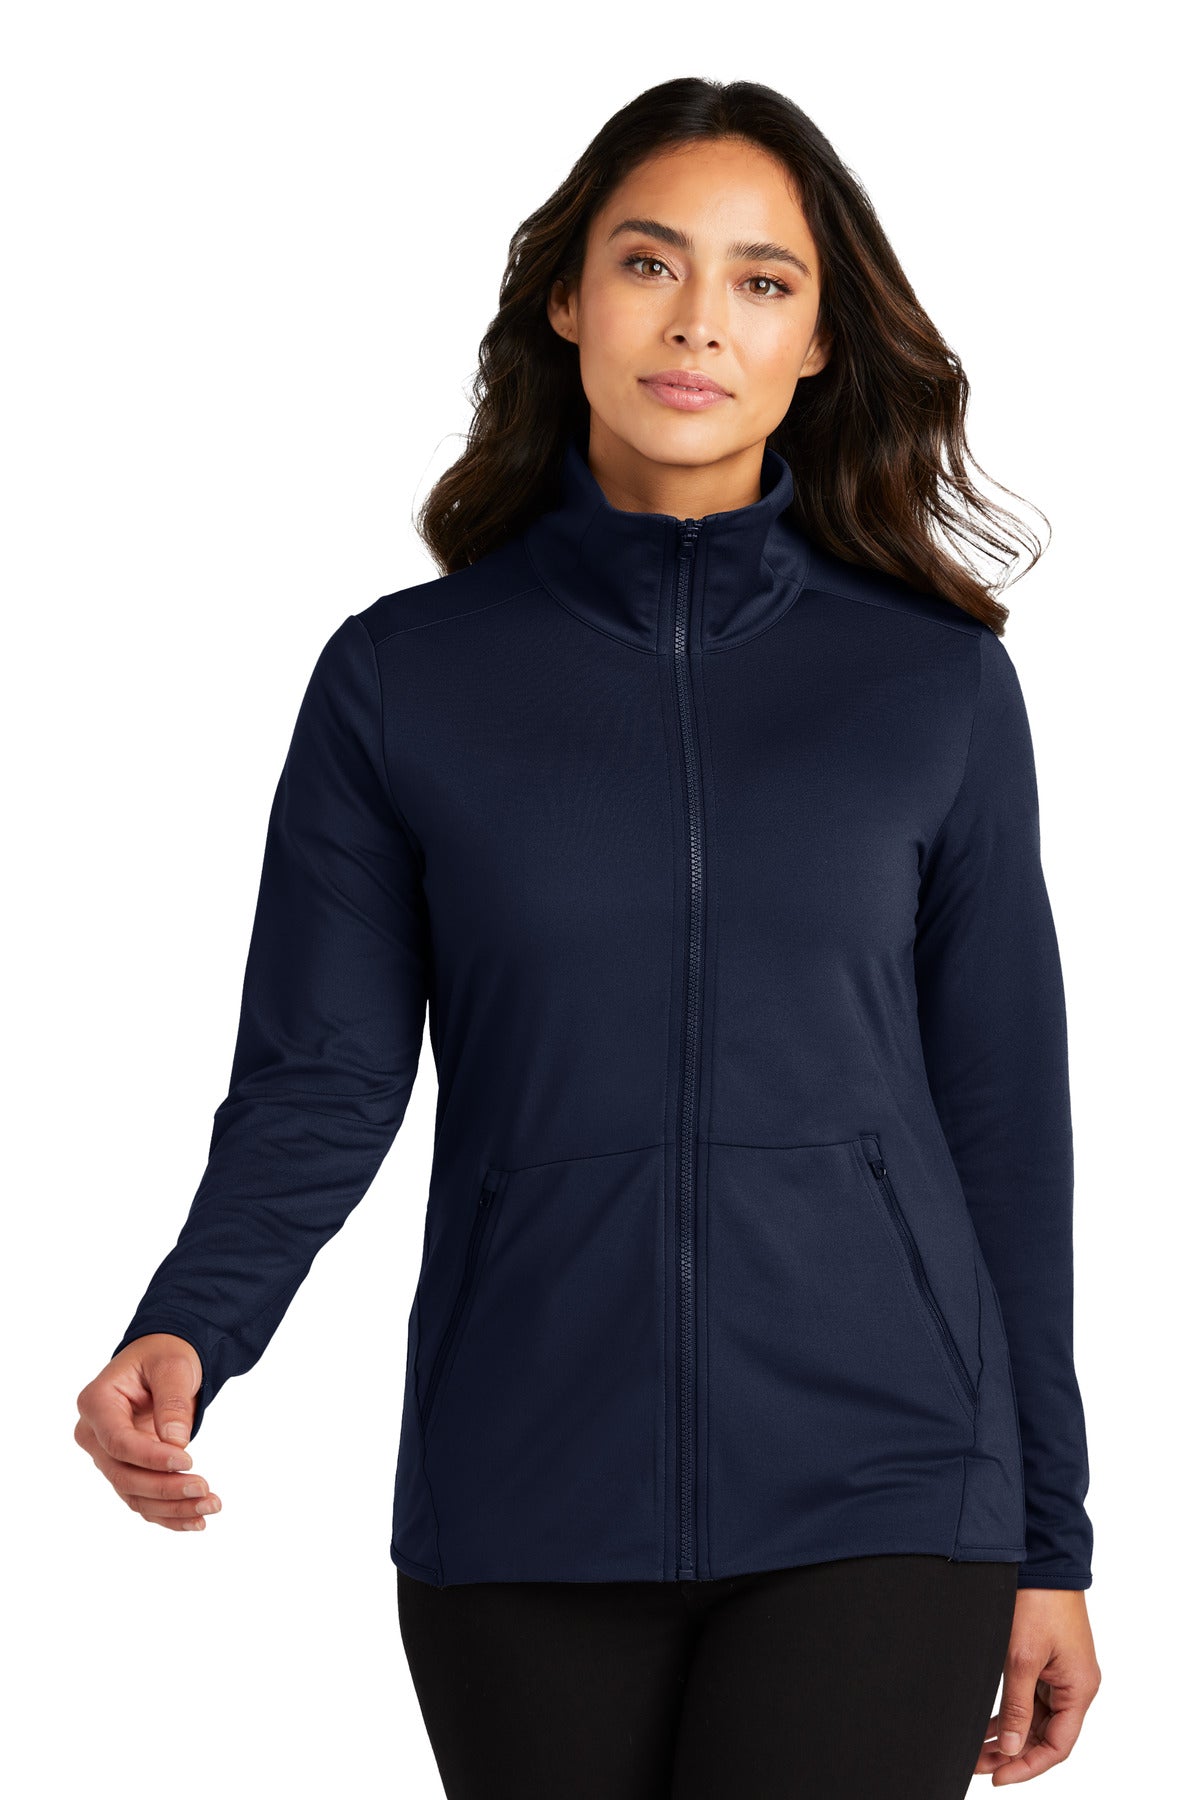 Port Authority® Ladies Accord Stretch Fleece Full-Zip LK595 - DFW Impression